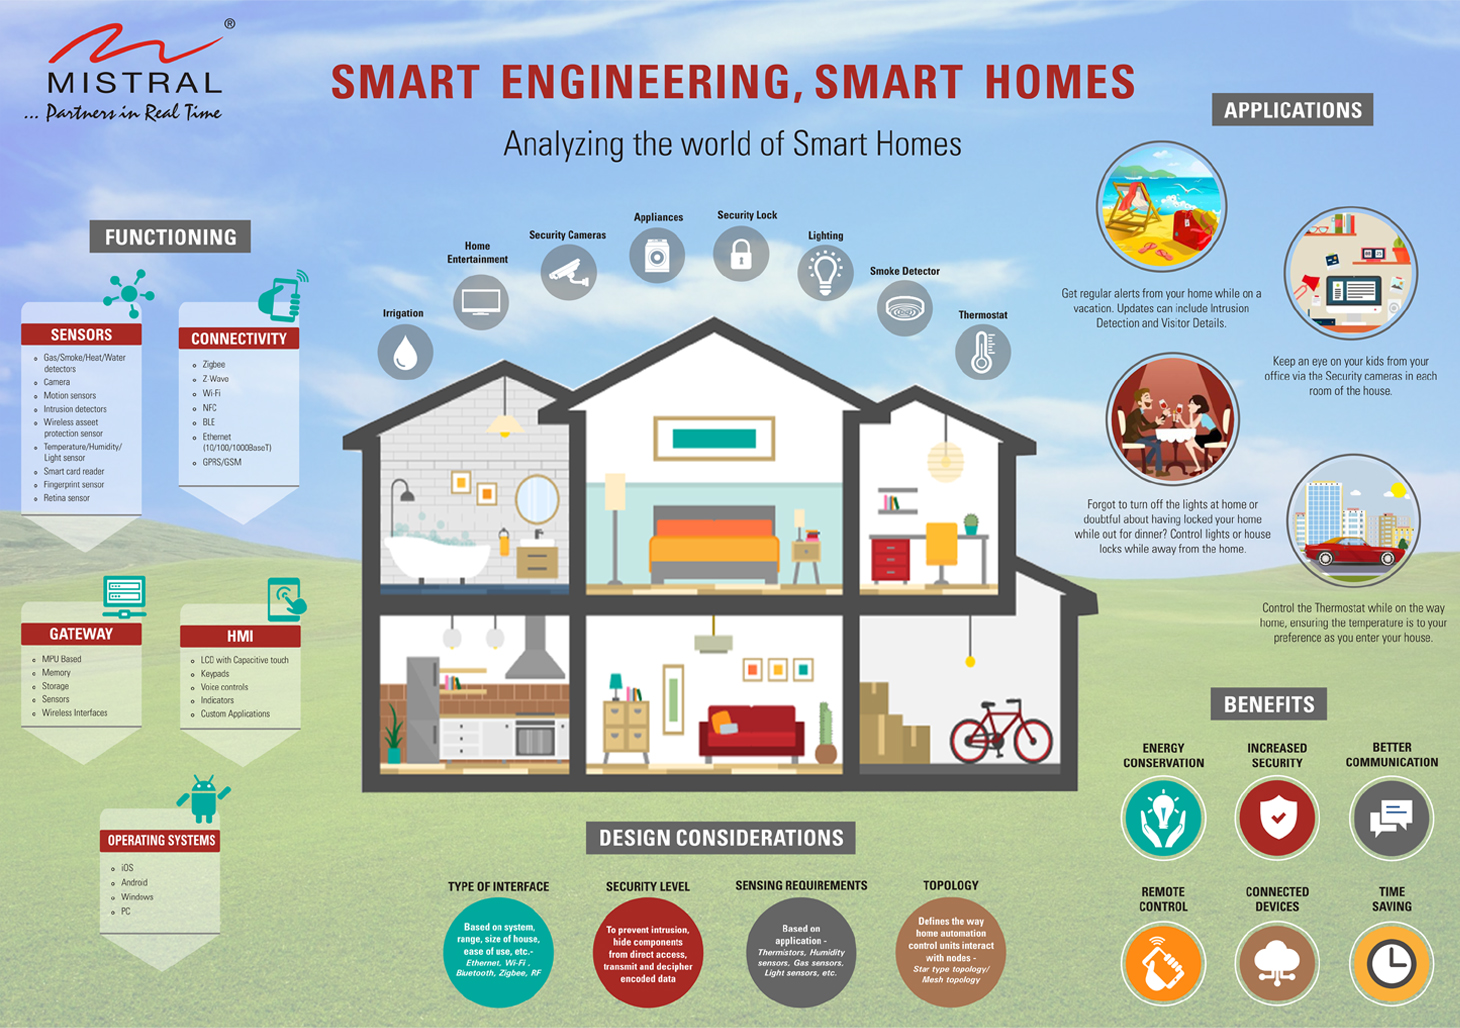 belkin smart home products